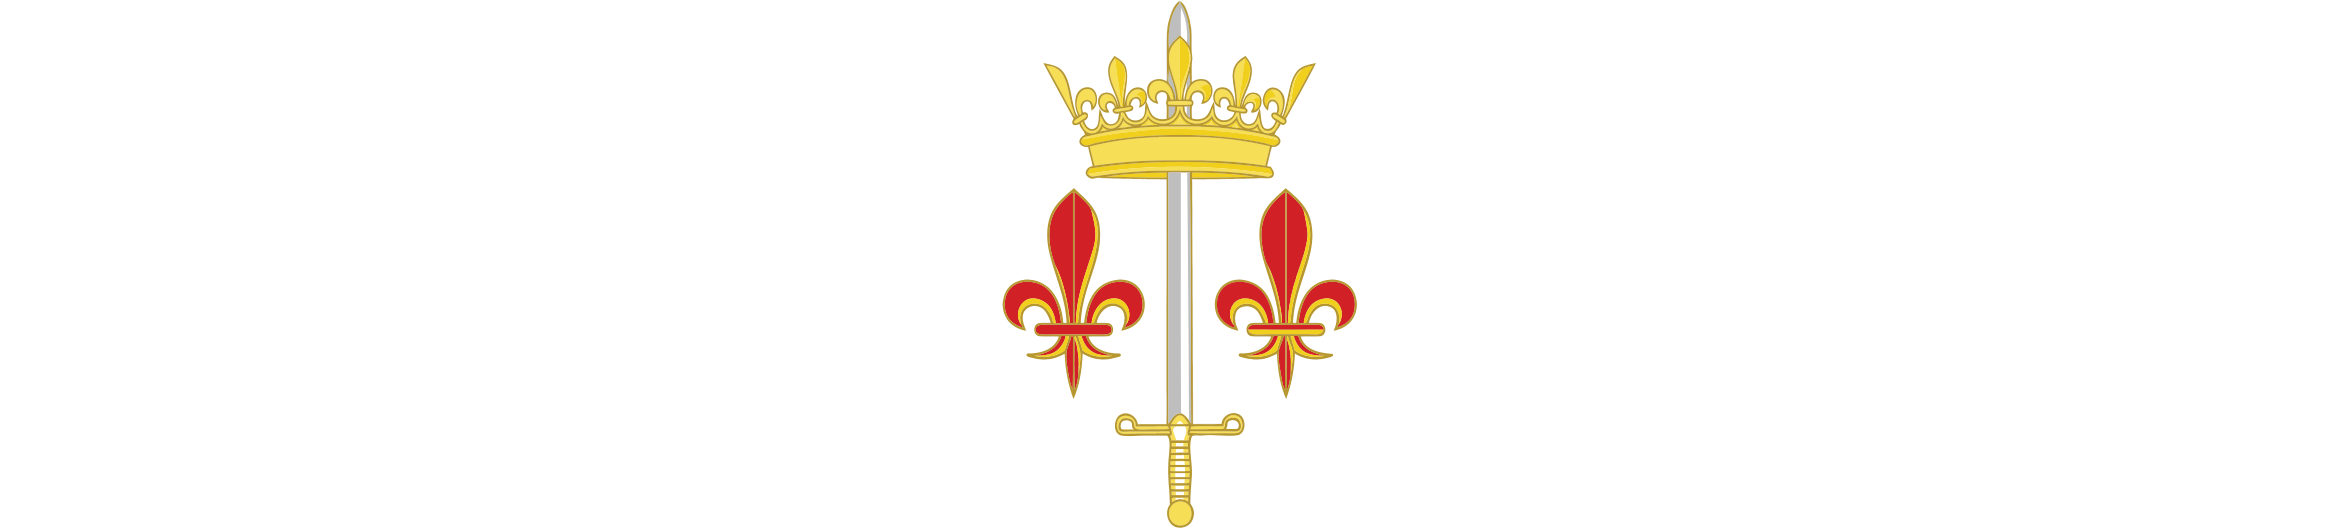 Saint Joan Of Arc Catholic Church - Catholic Church (2340x545), Png Download